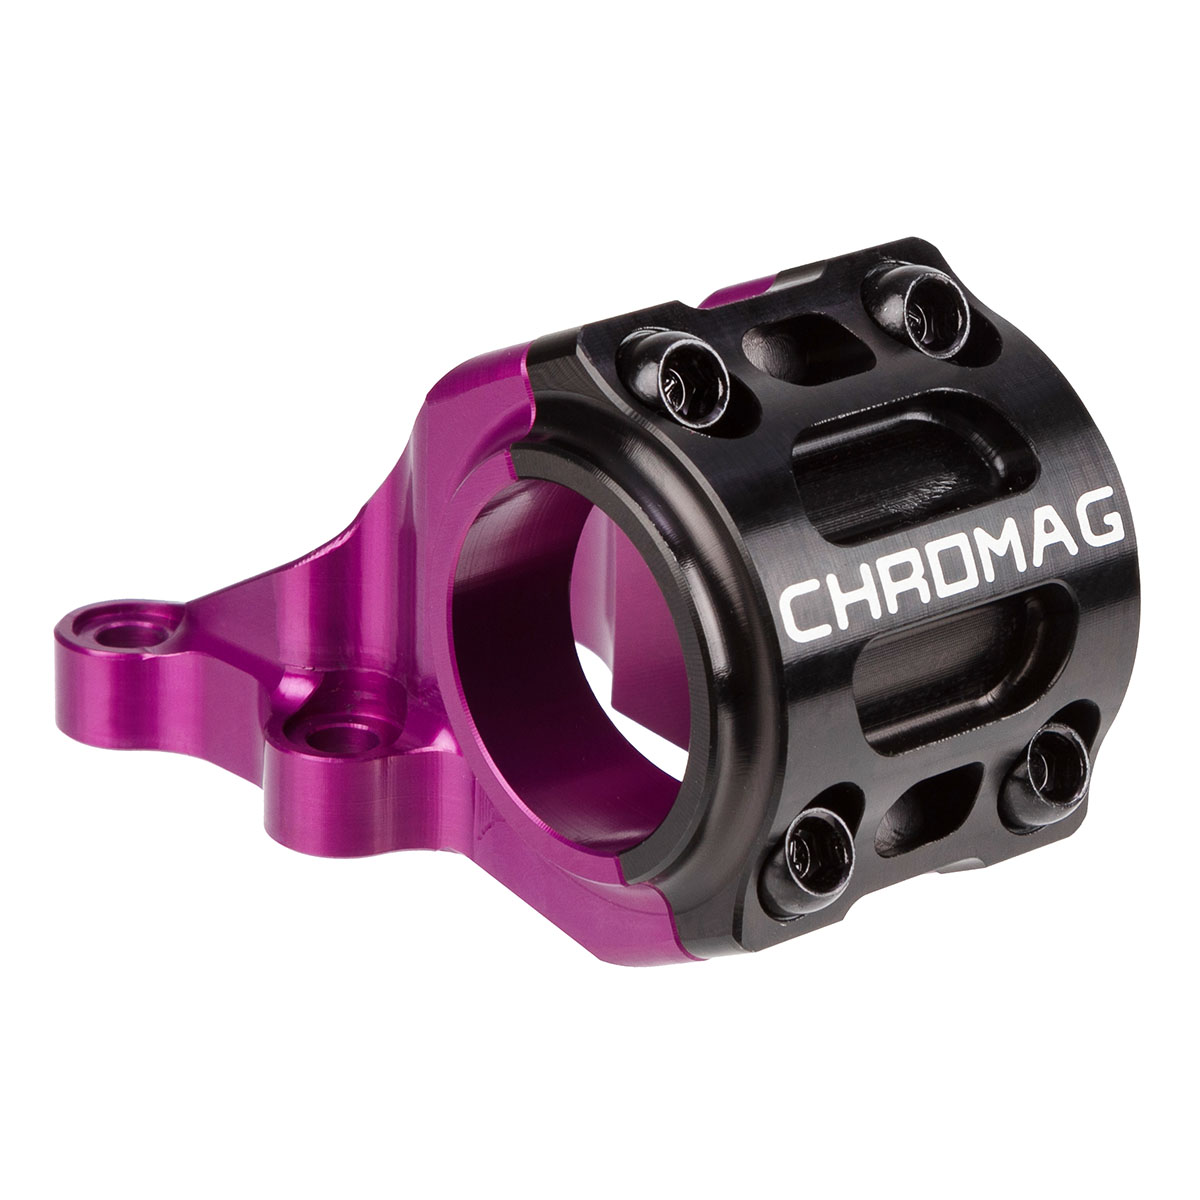 Chromag MTB Stem Director Direct Mount 31.8 mm, 47 mm Reach, Purple